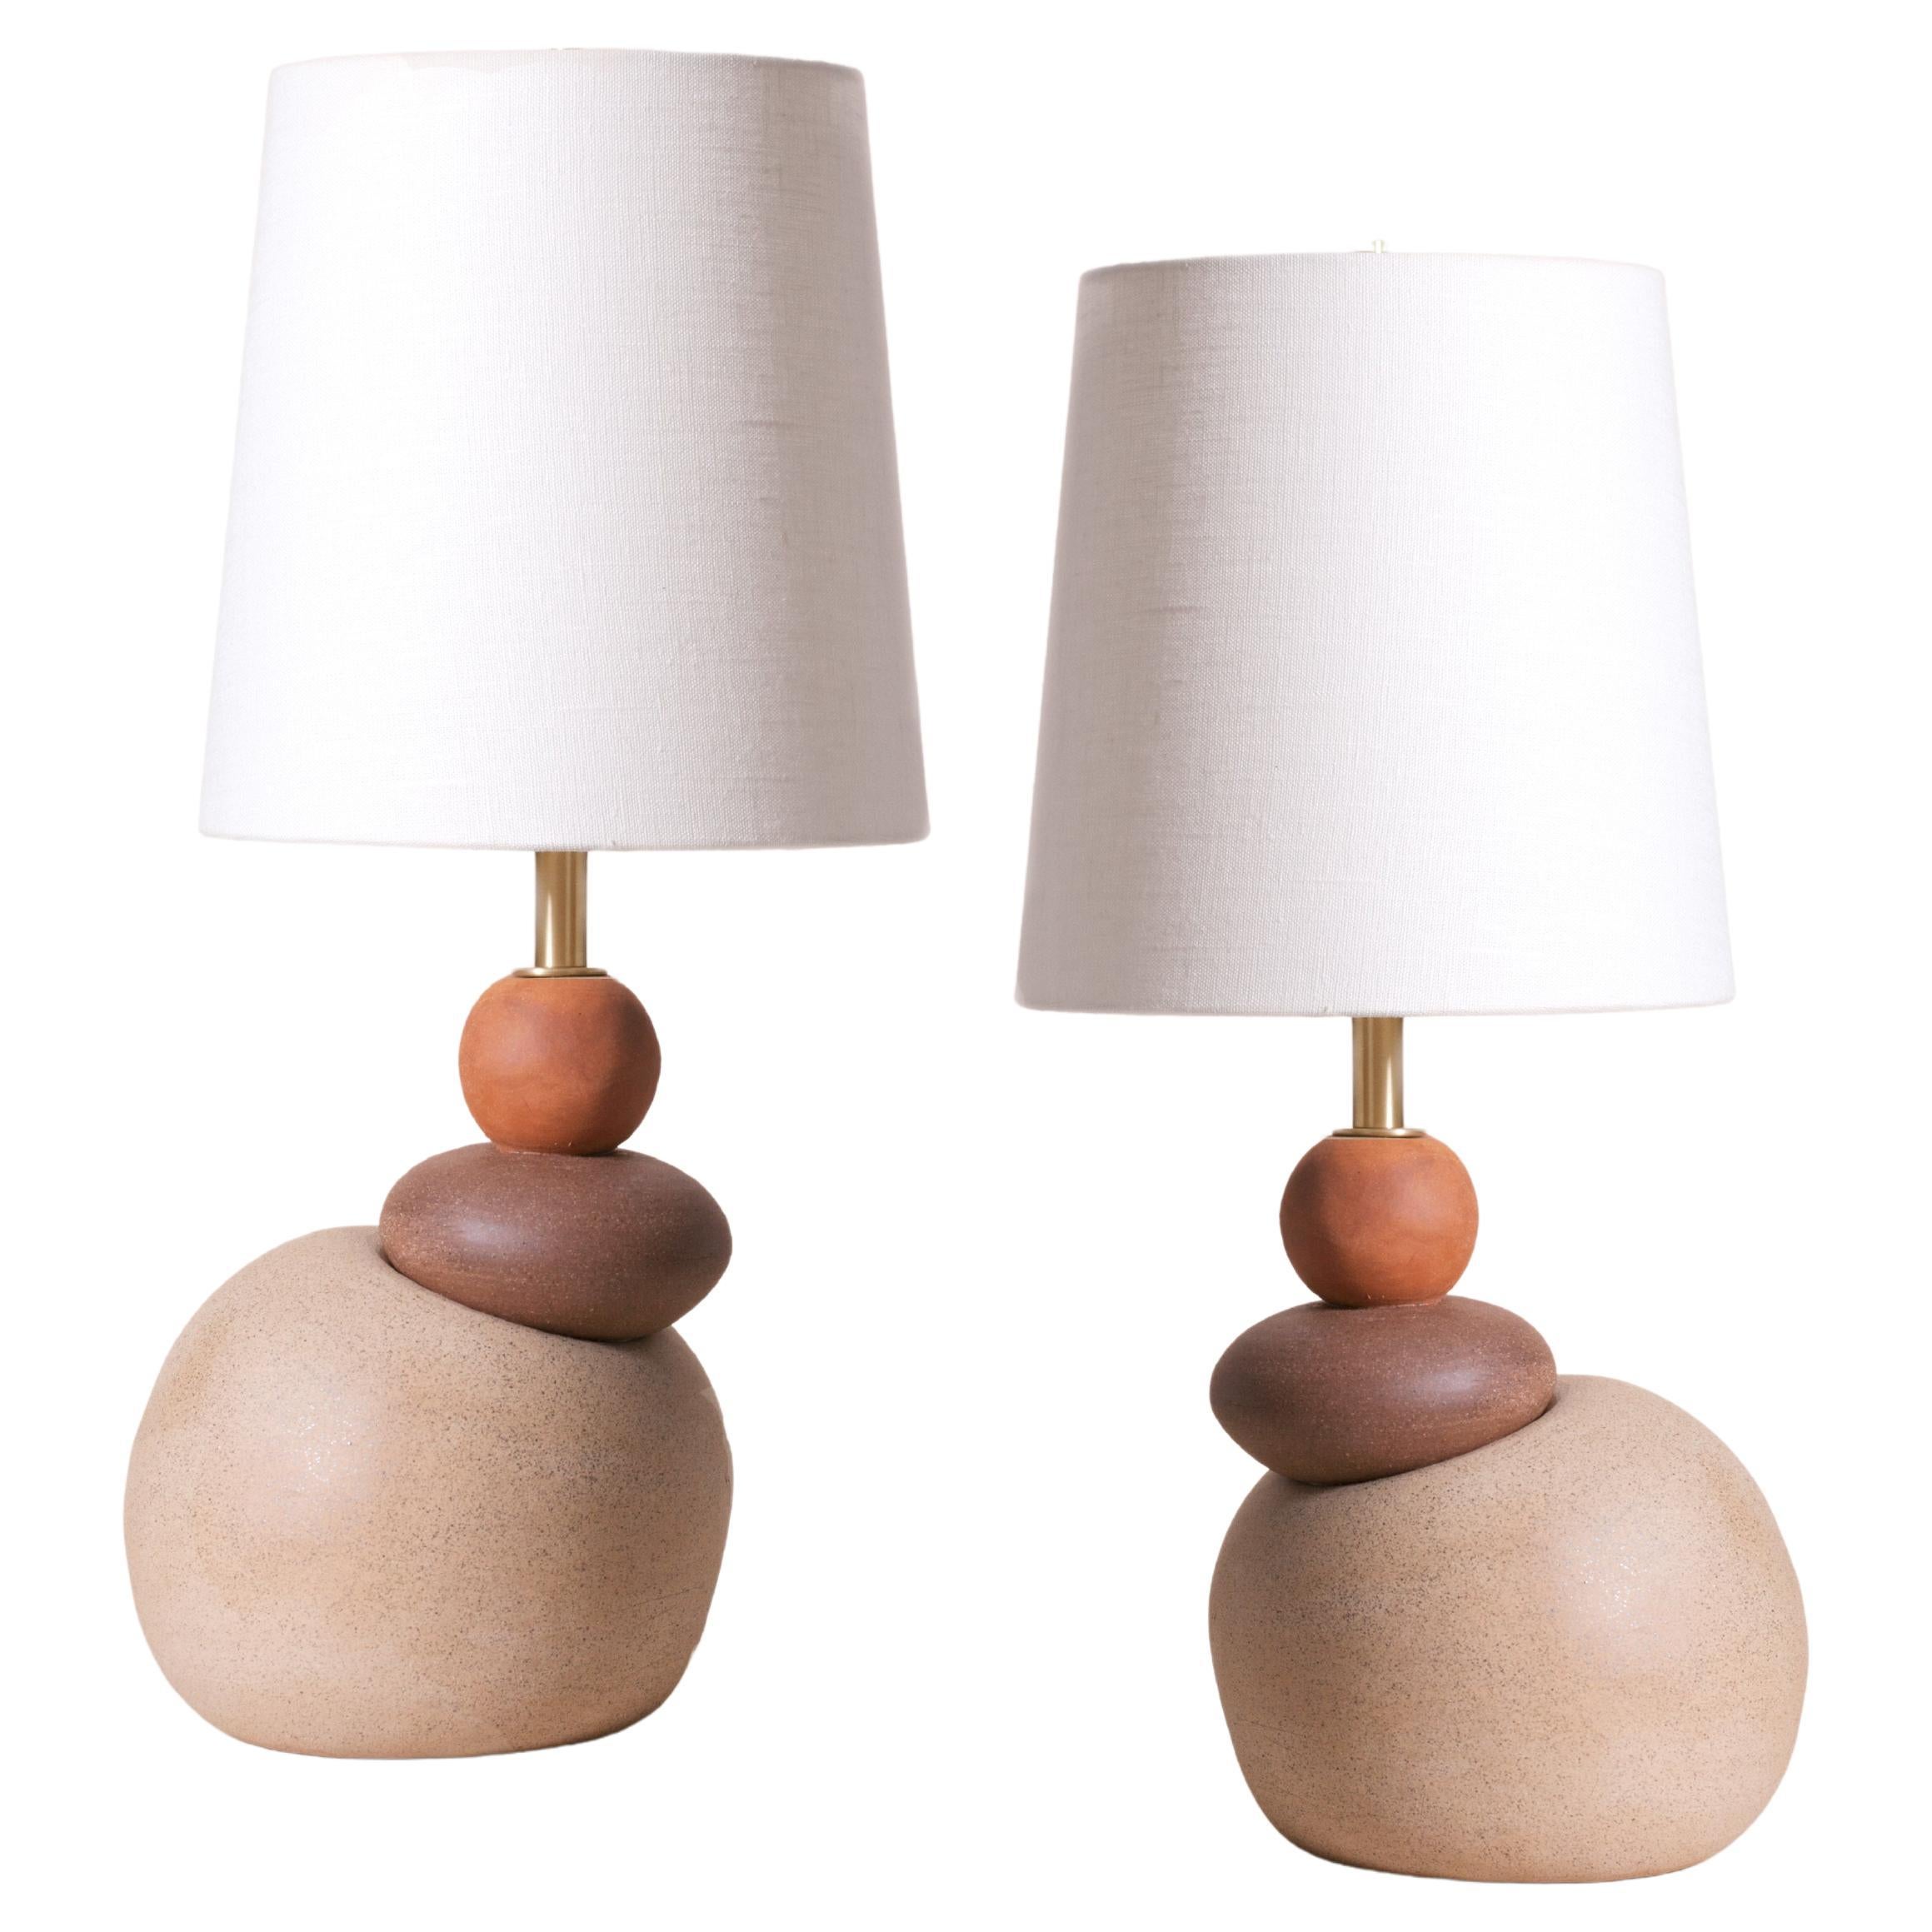 Pair of Contemporary Handmade Ceramic Dupont Lamps